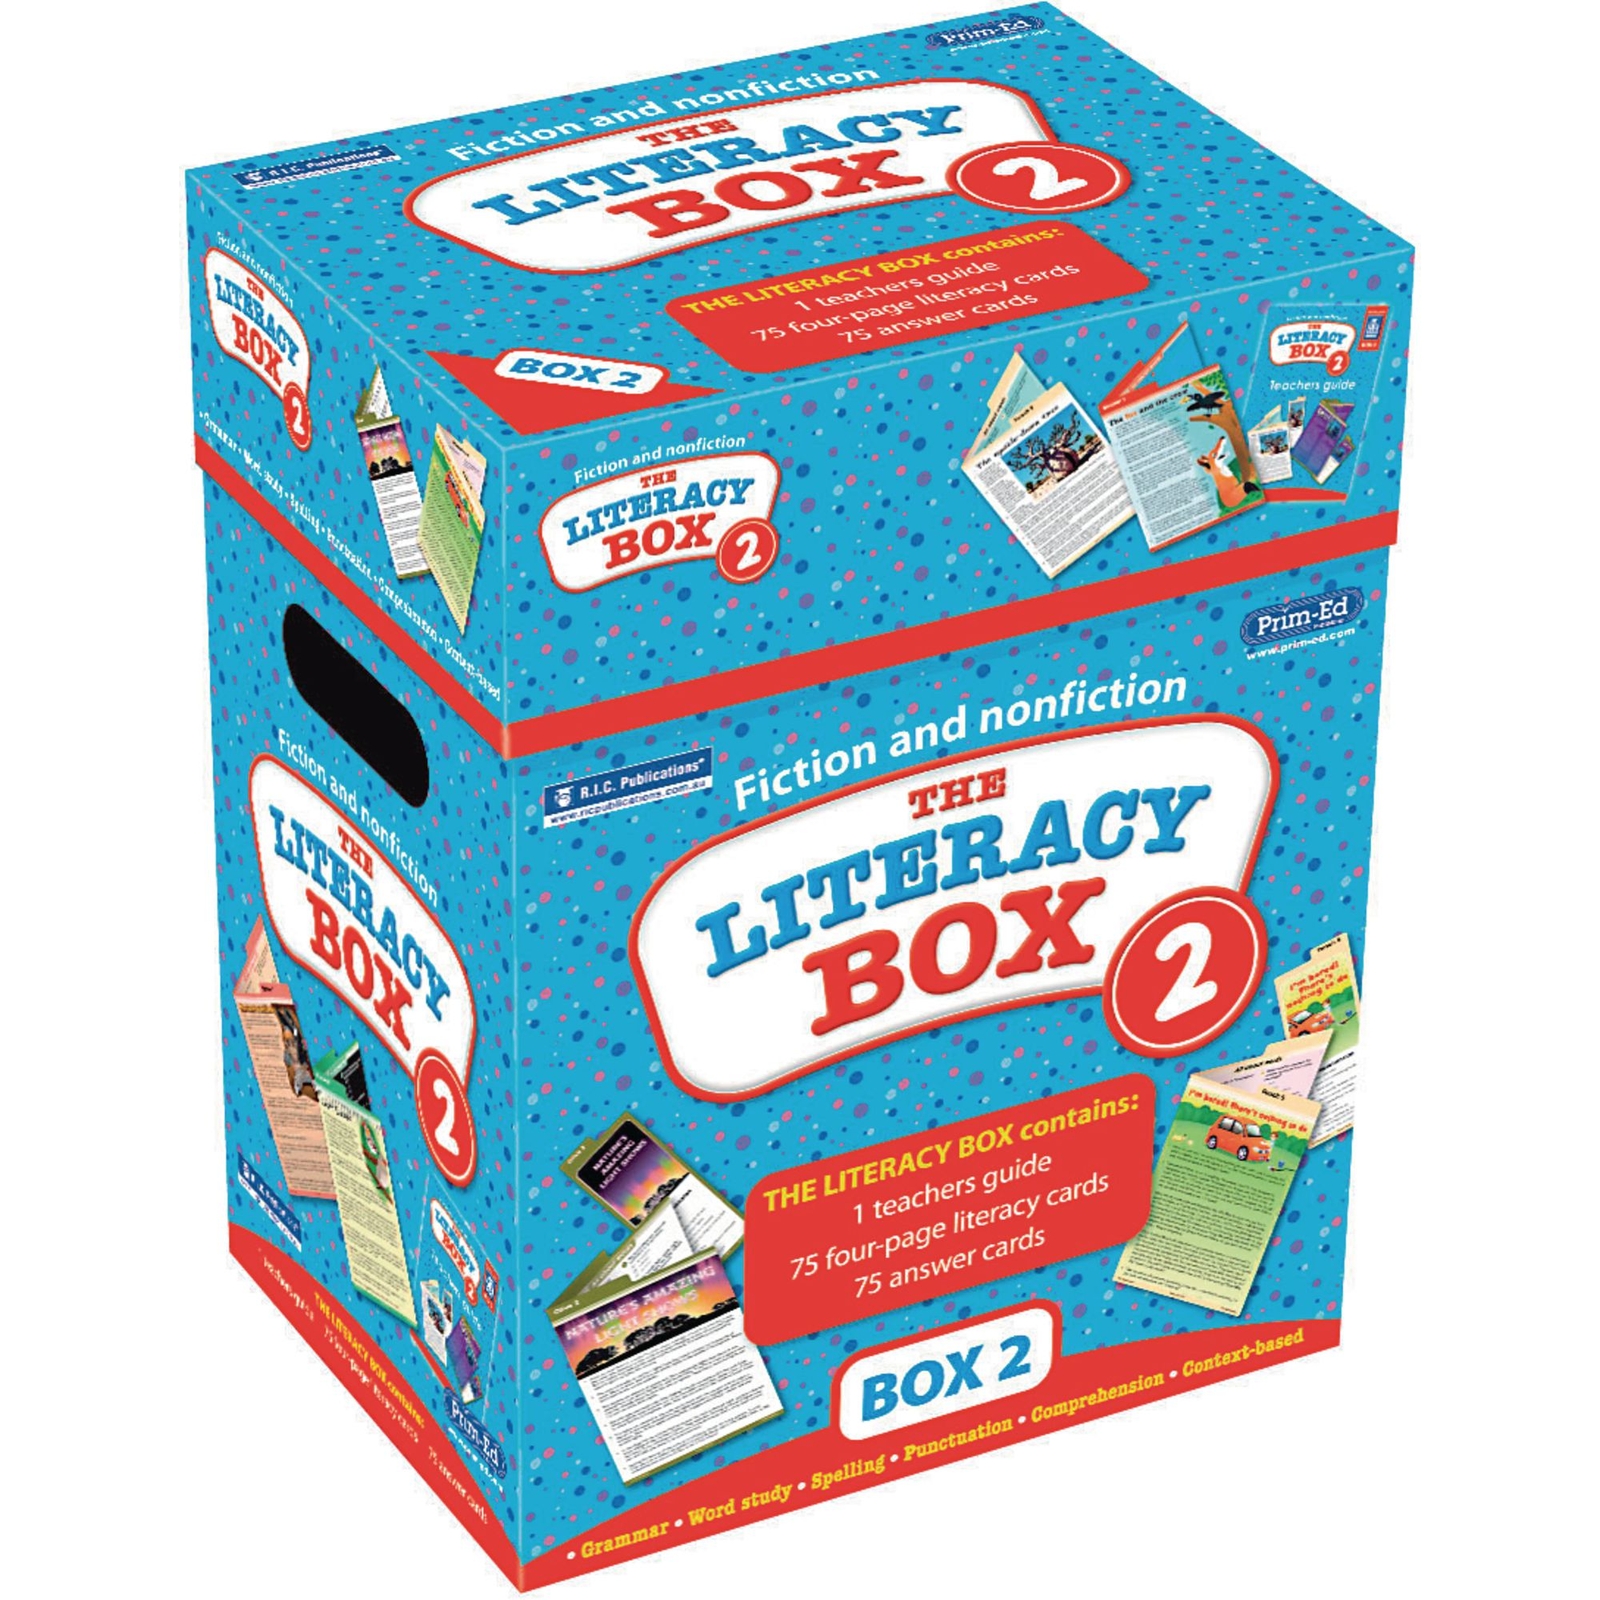 The Literacy Box Set 2